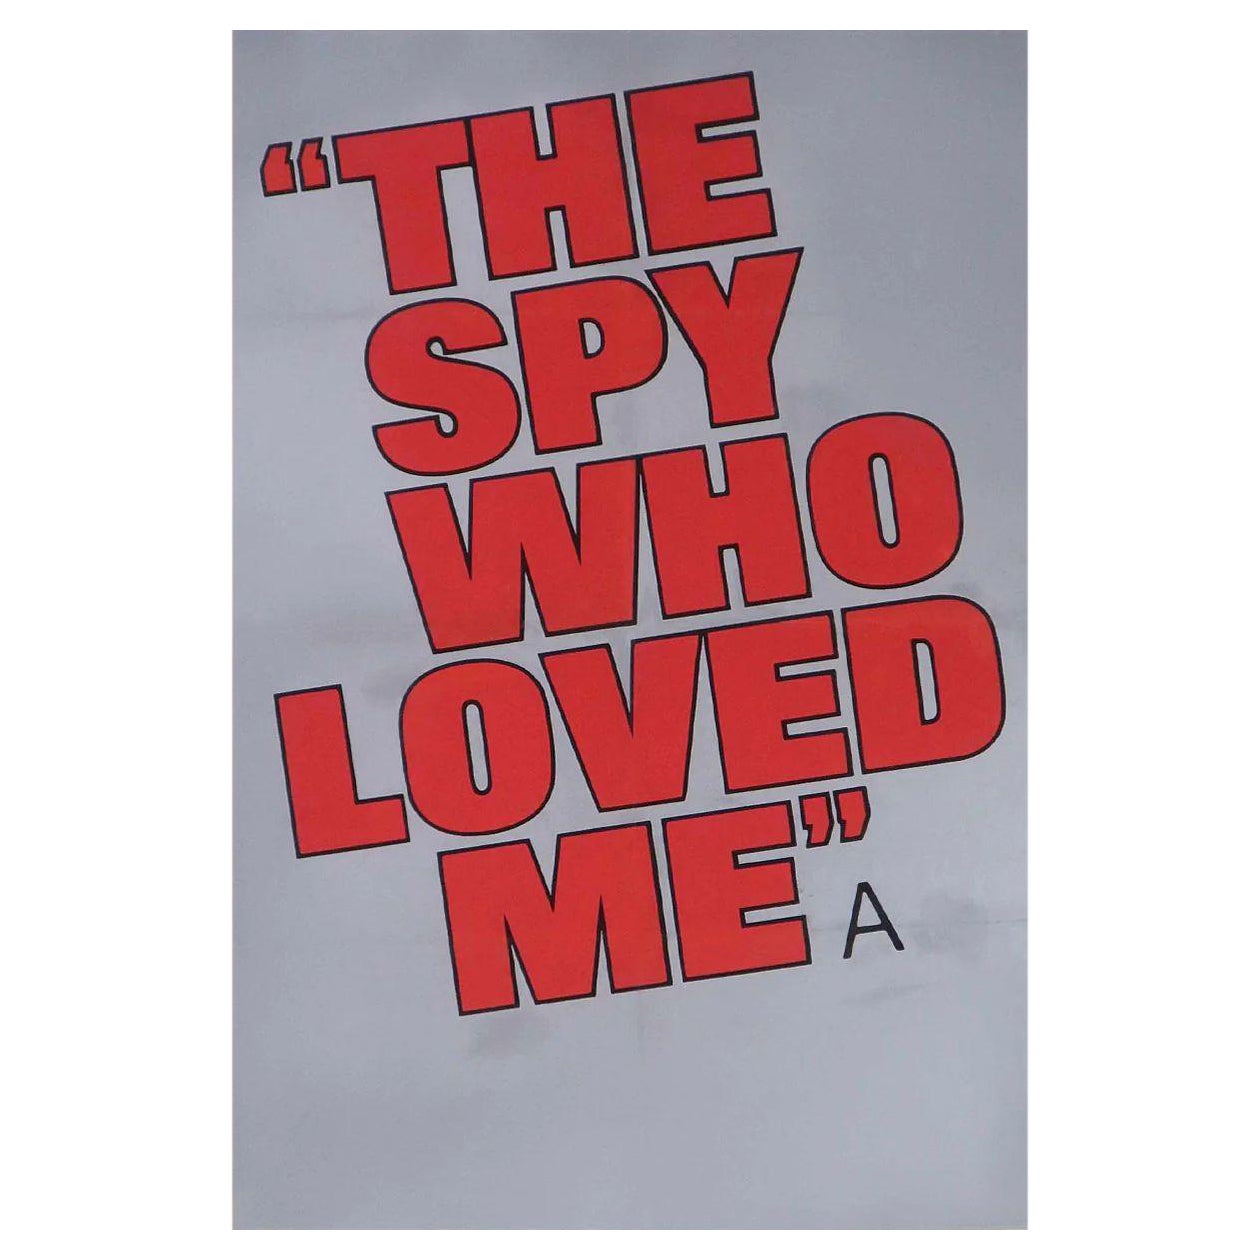 Spy Who Loved Me, Unframed Poster, 1973 For Sale